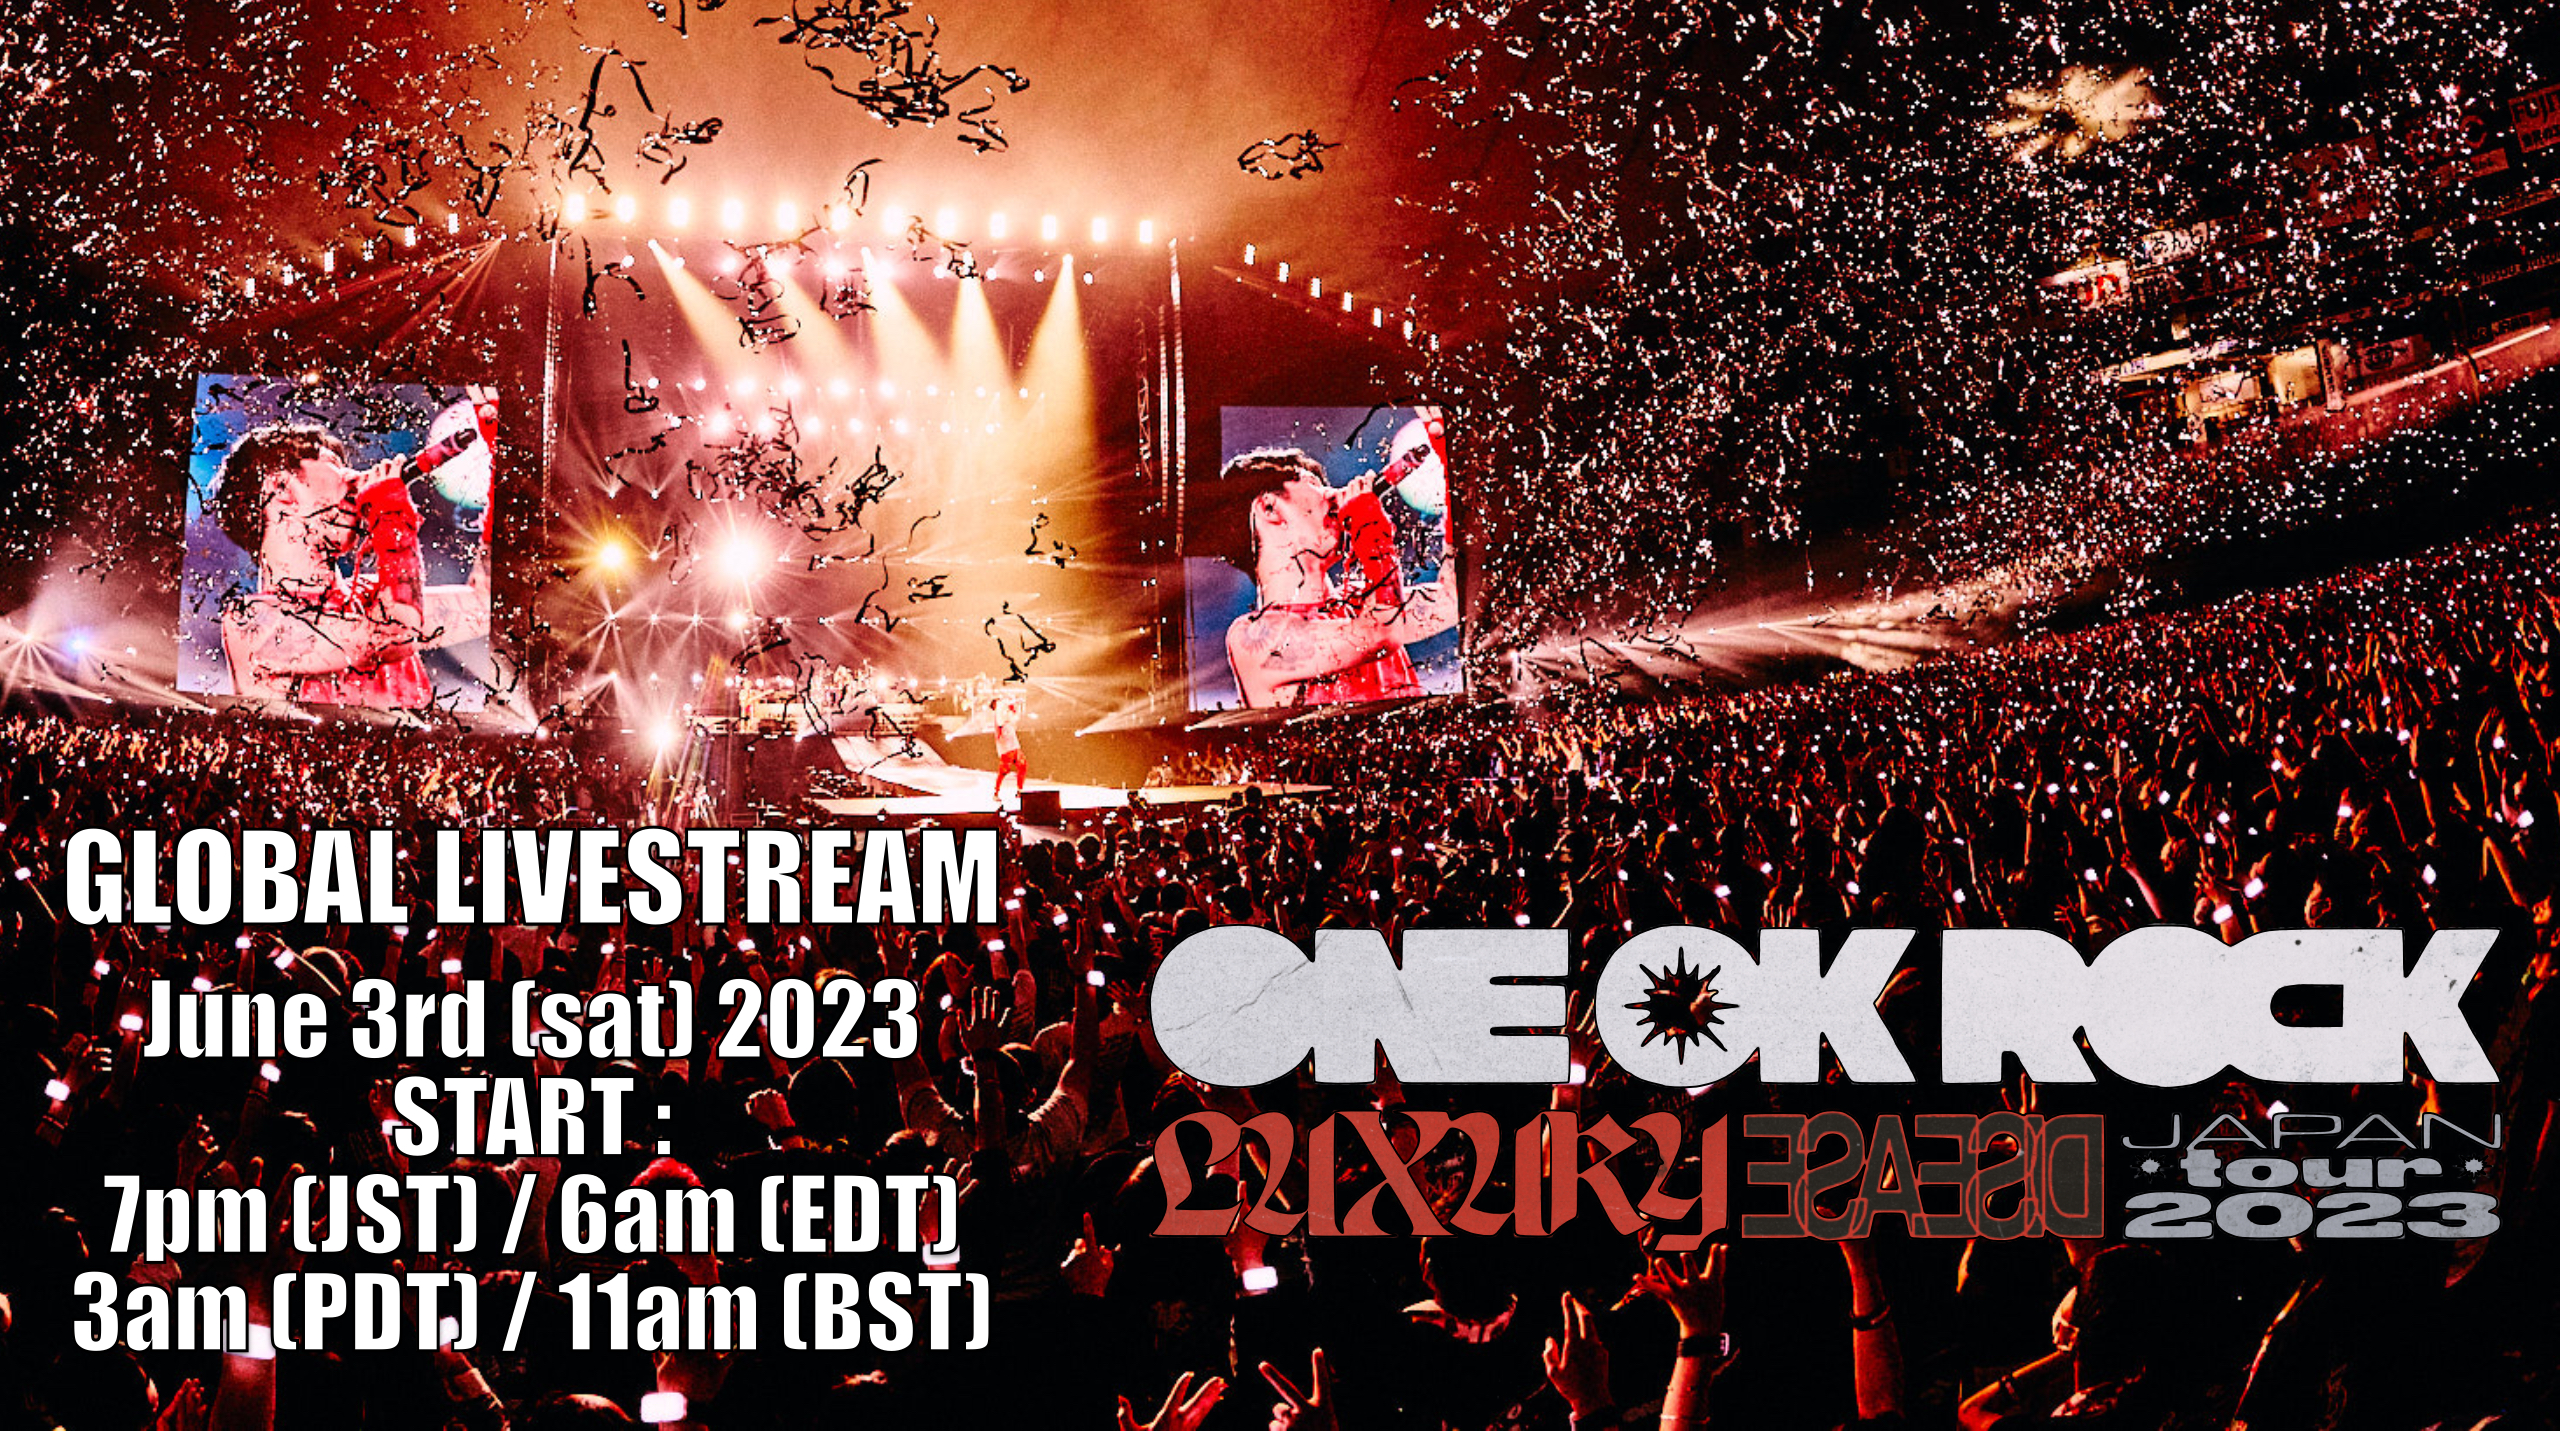 ONE OK ROCK official website